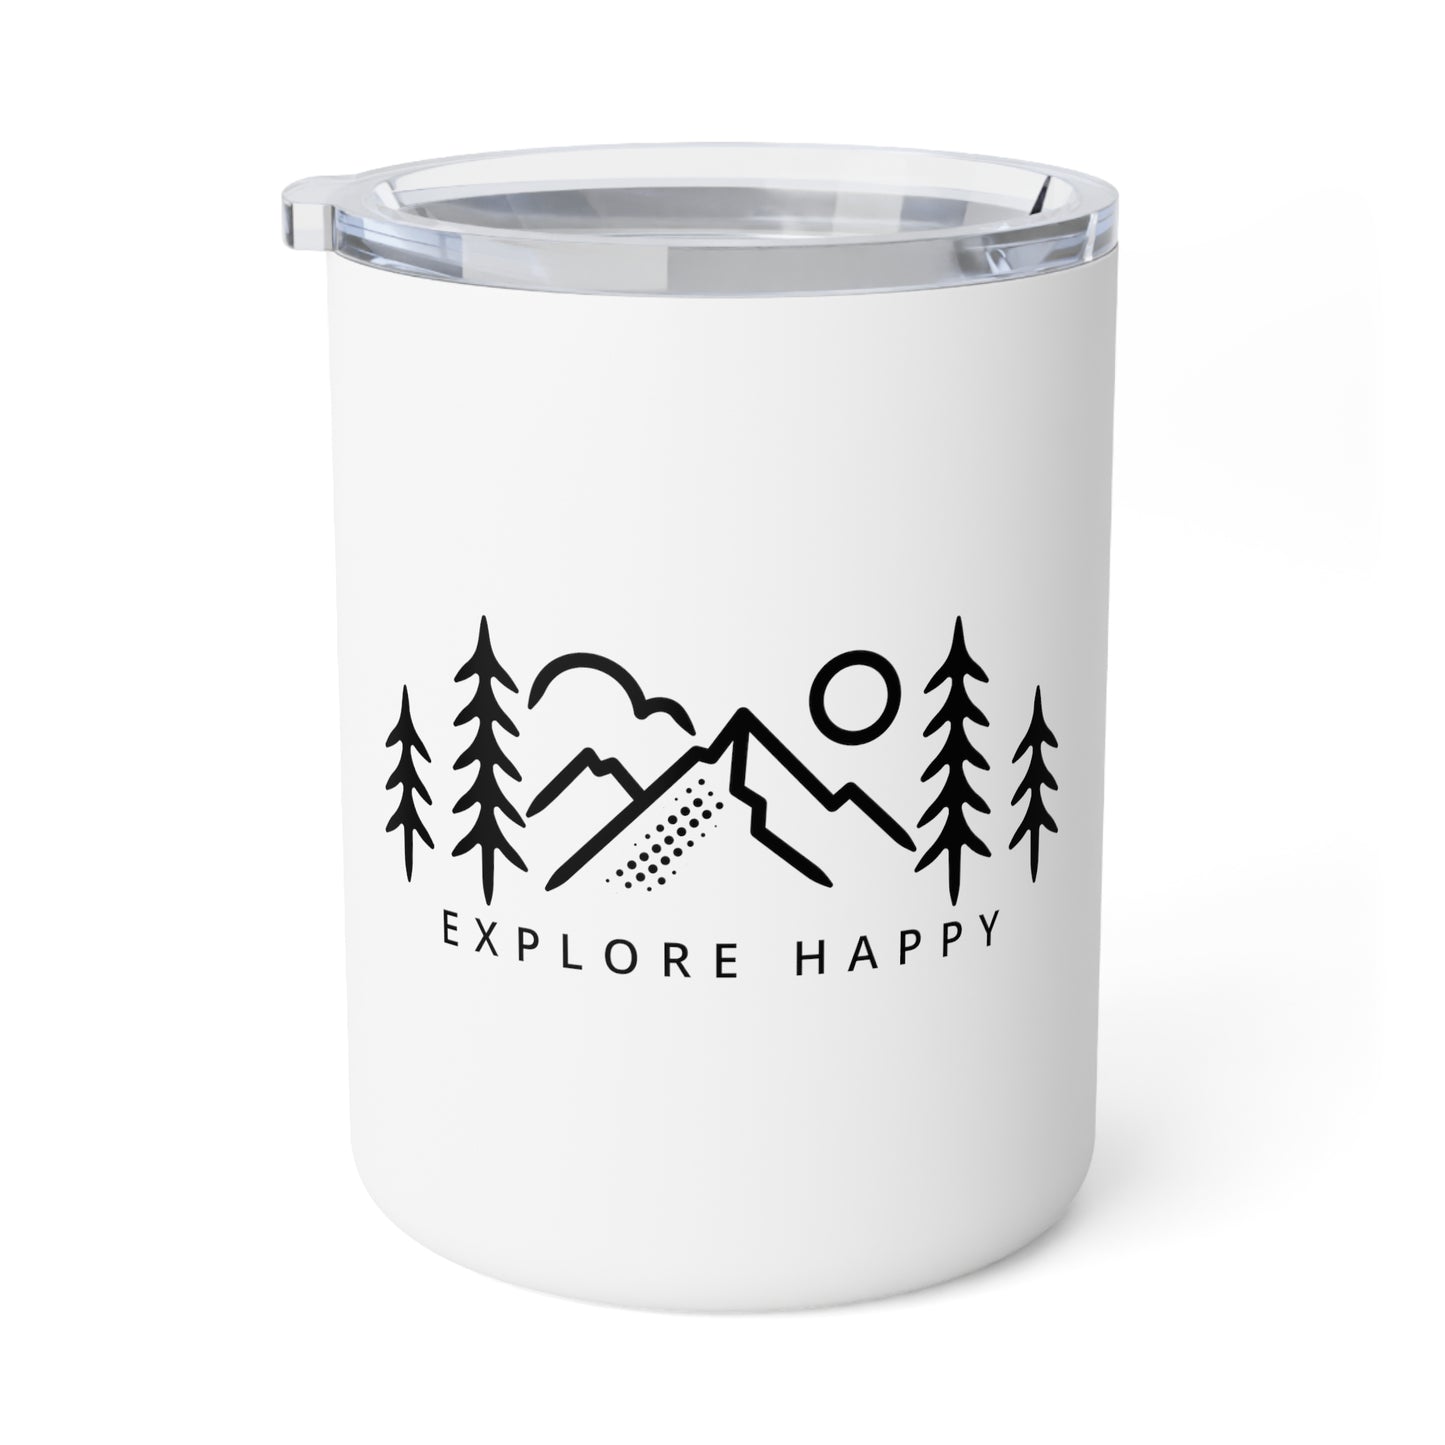 Explore Happy Insulated Coffee Mug